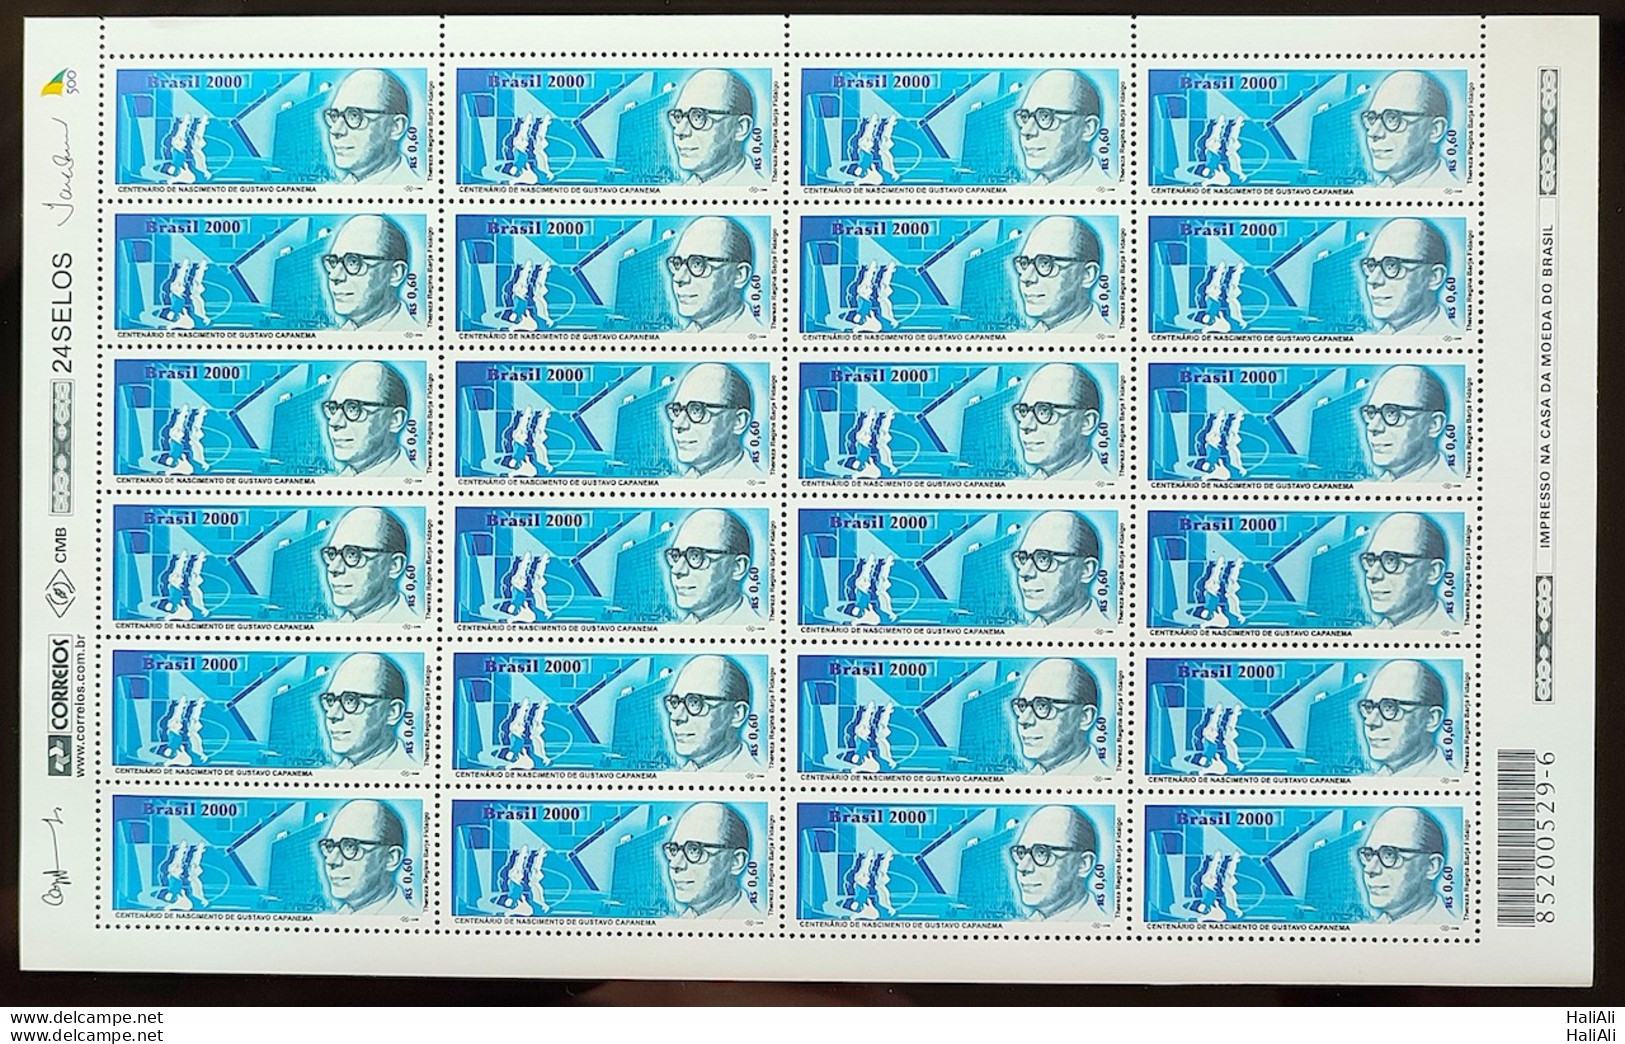 C 2297 Brazil Stamp 100 Years Gustavo Capanema Education Politic 2000 Sheet - Neufs